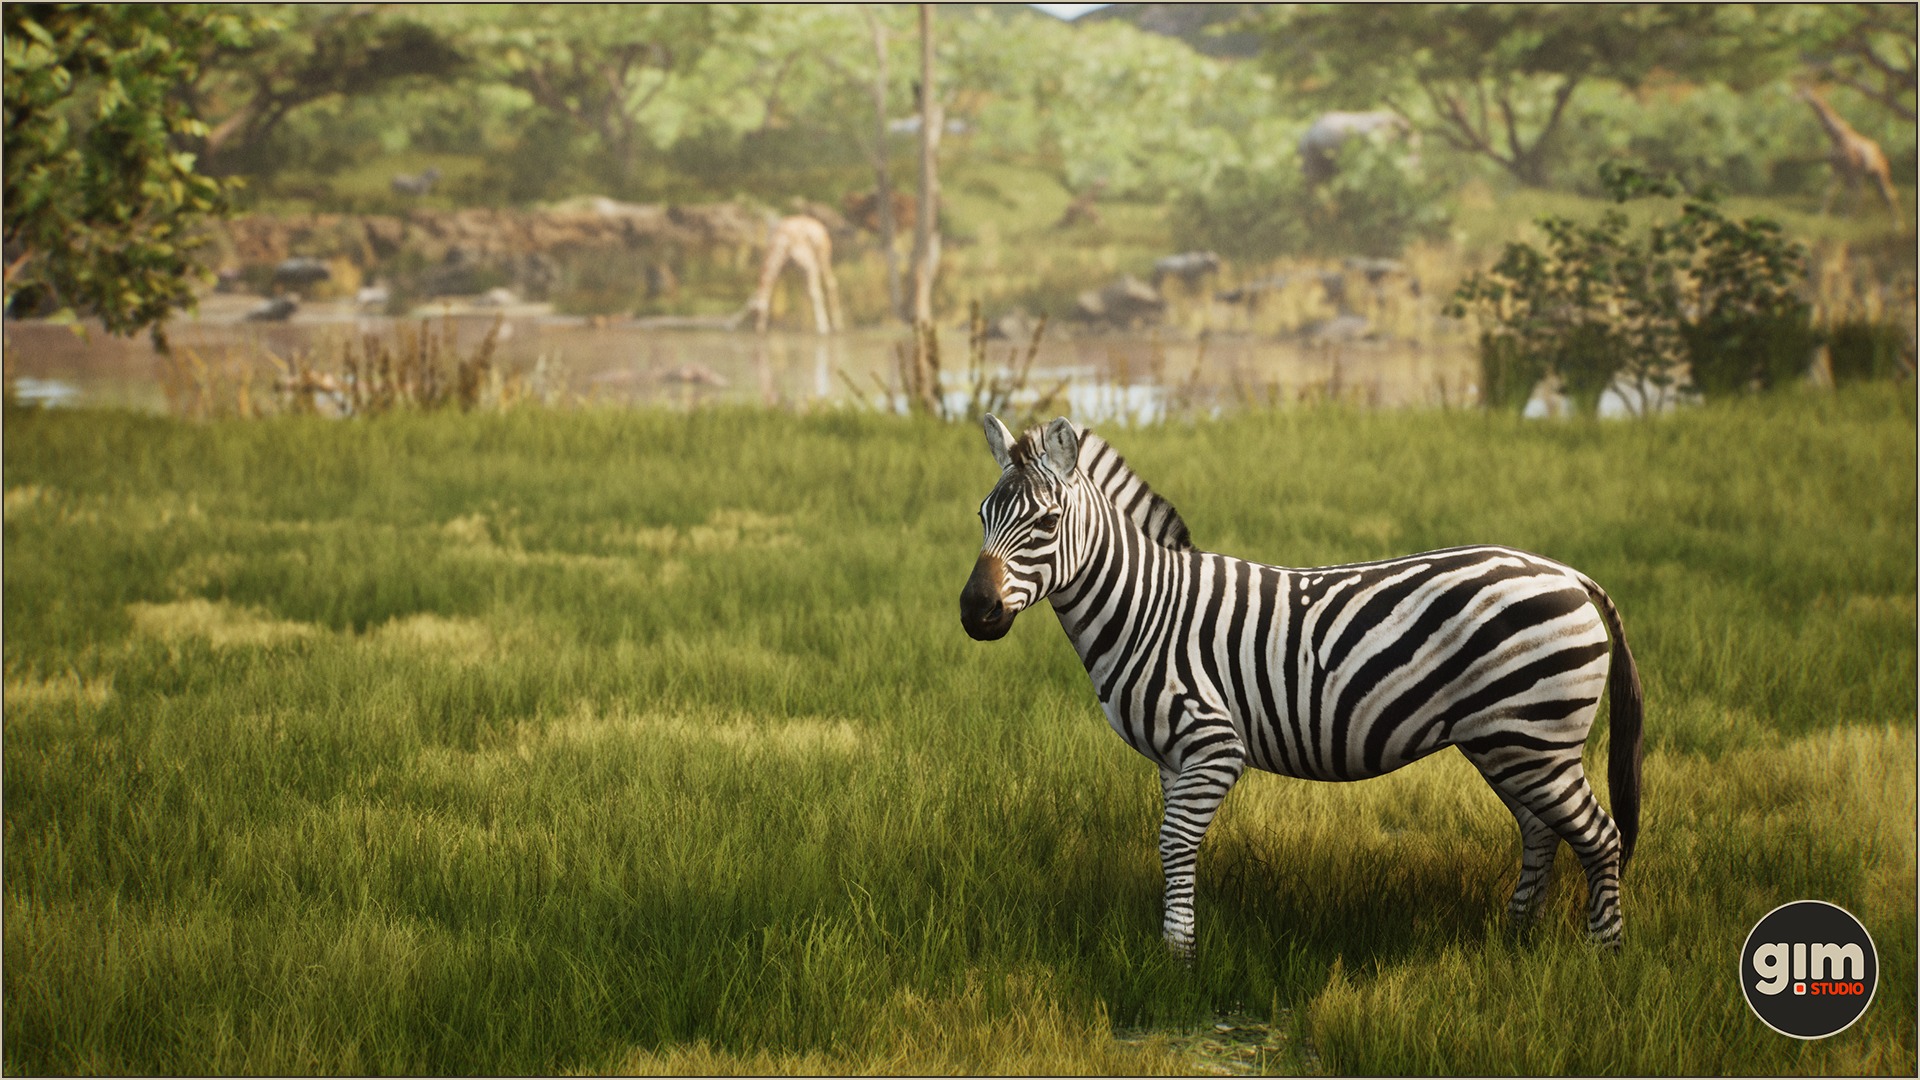 Zebra in beautiful African environment.